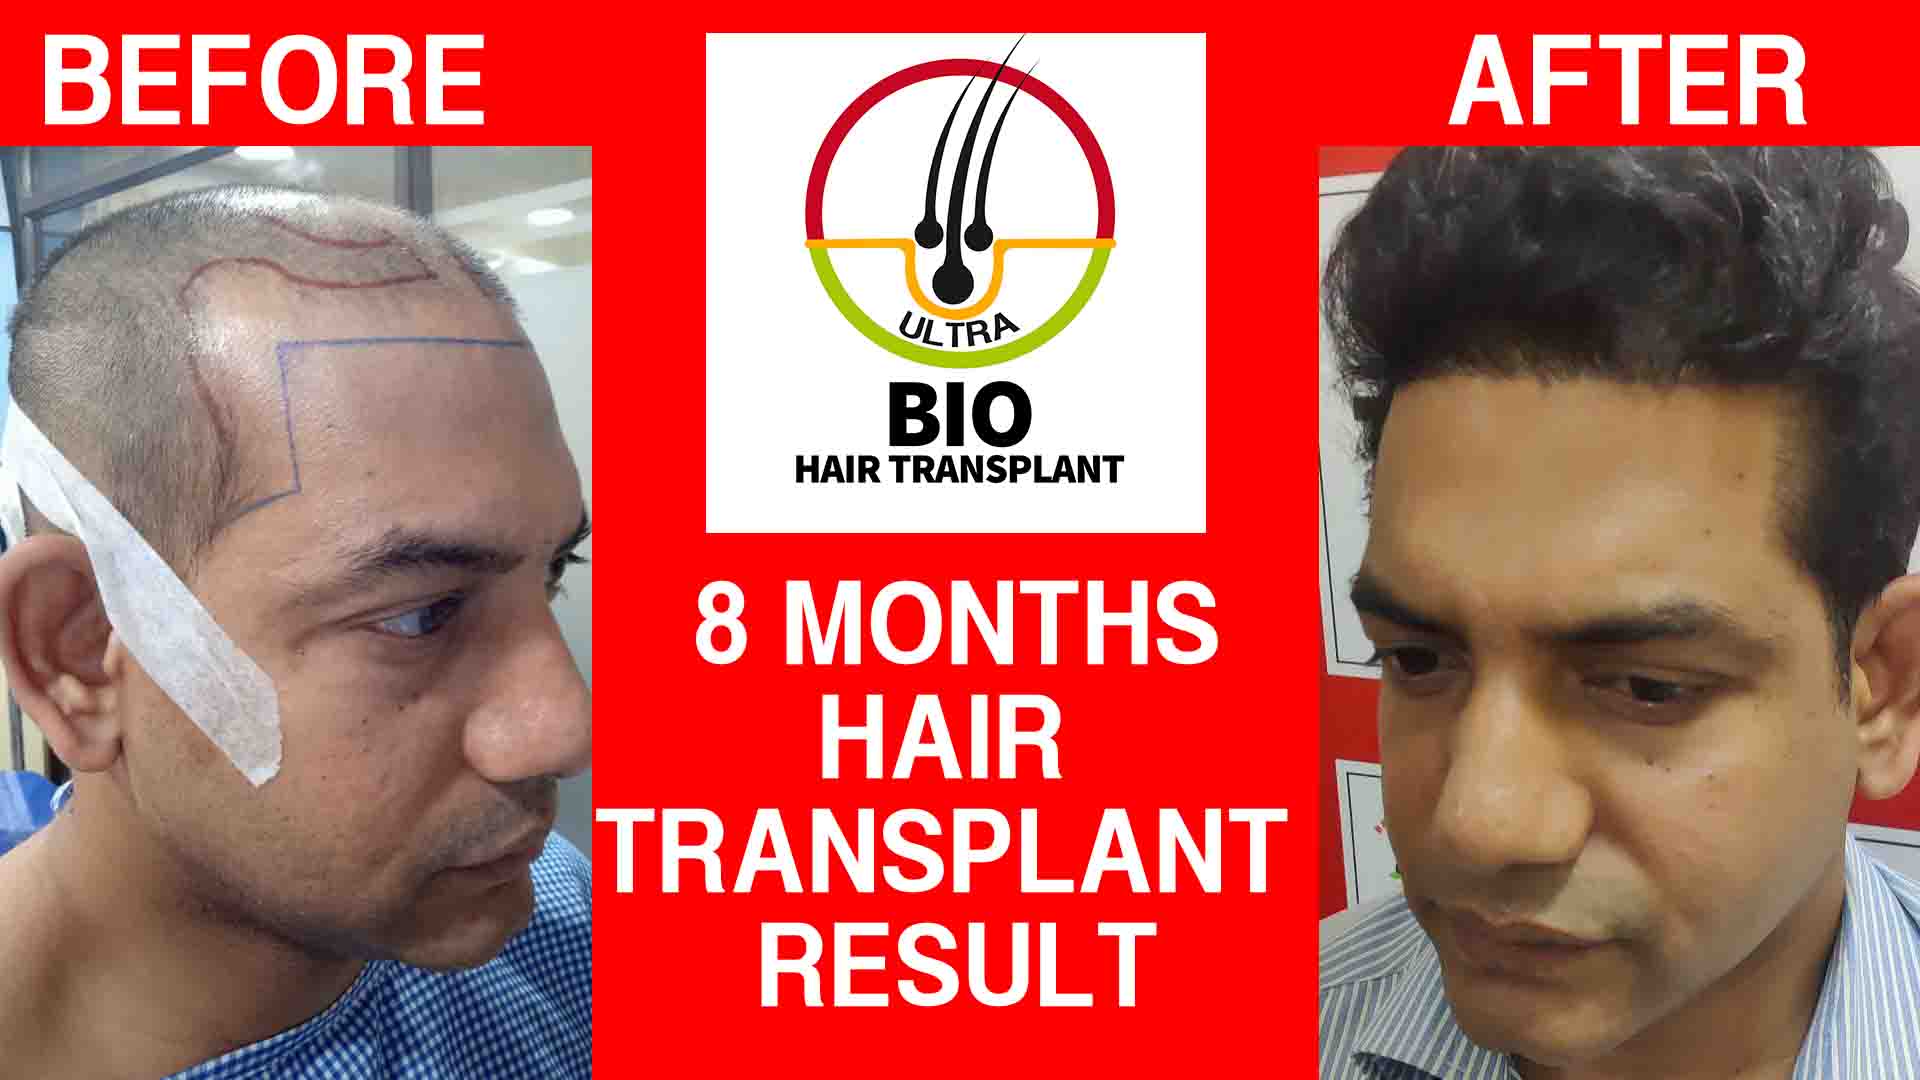 8 months hair transplant result